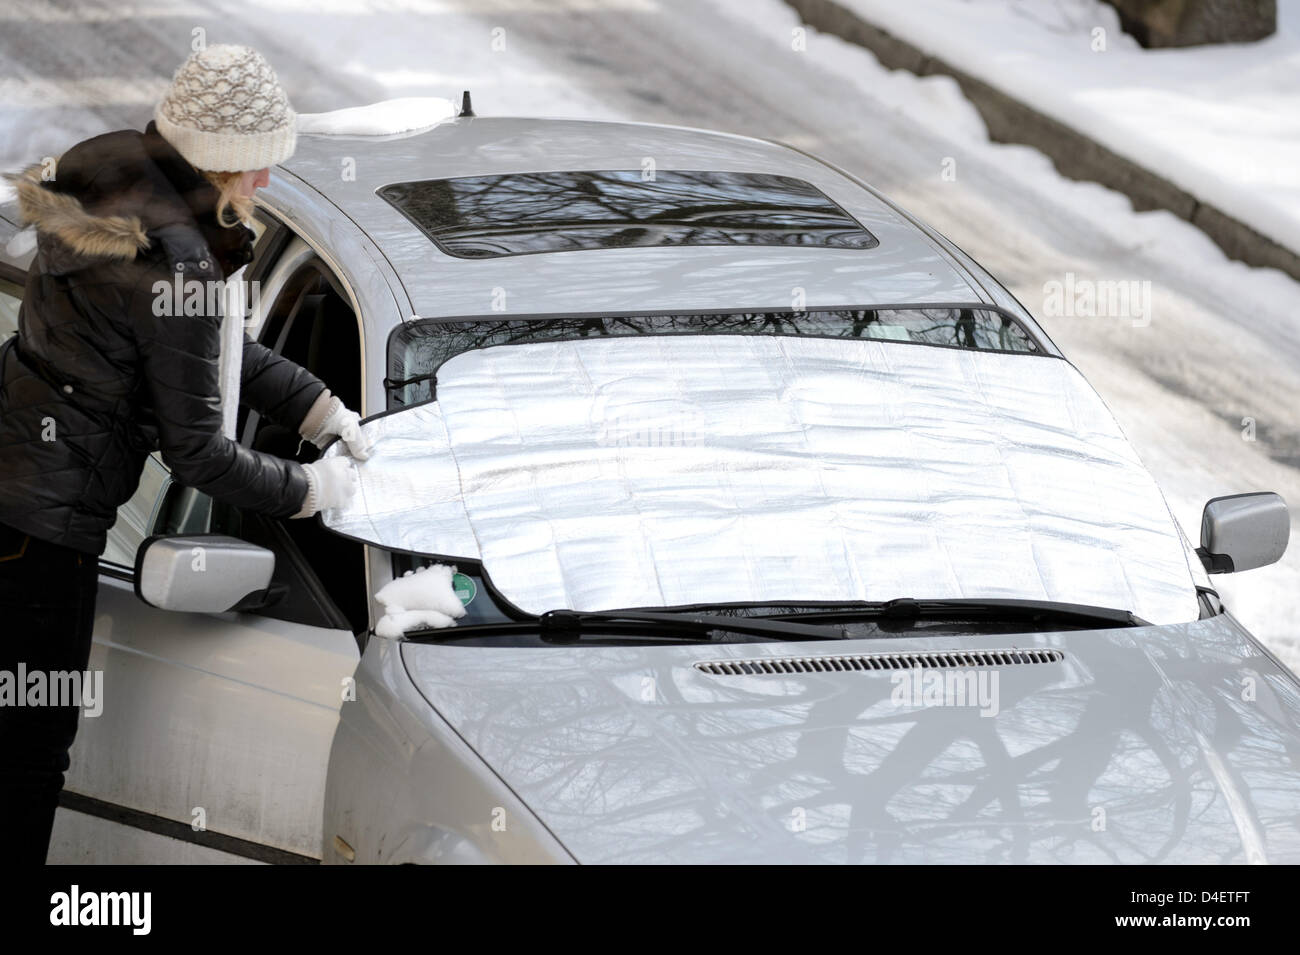 https://c8.alamy.com/comp/D4ETFT/a-woman-places-a-antifreeze-tarpaulin-onto-the-windshield-of-a-car-D4ETFT.jpg